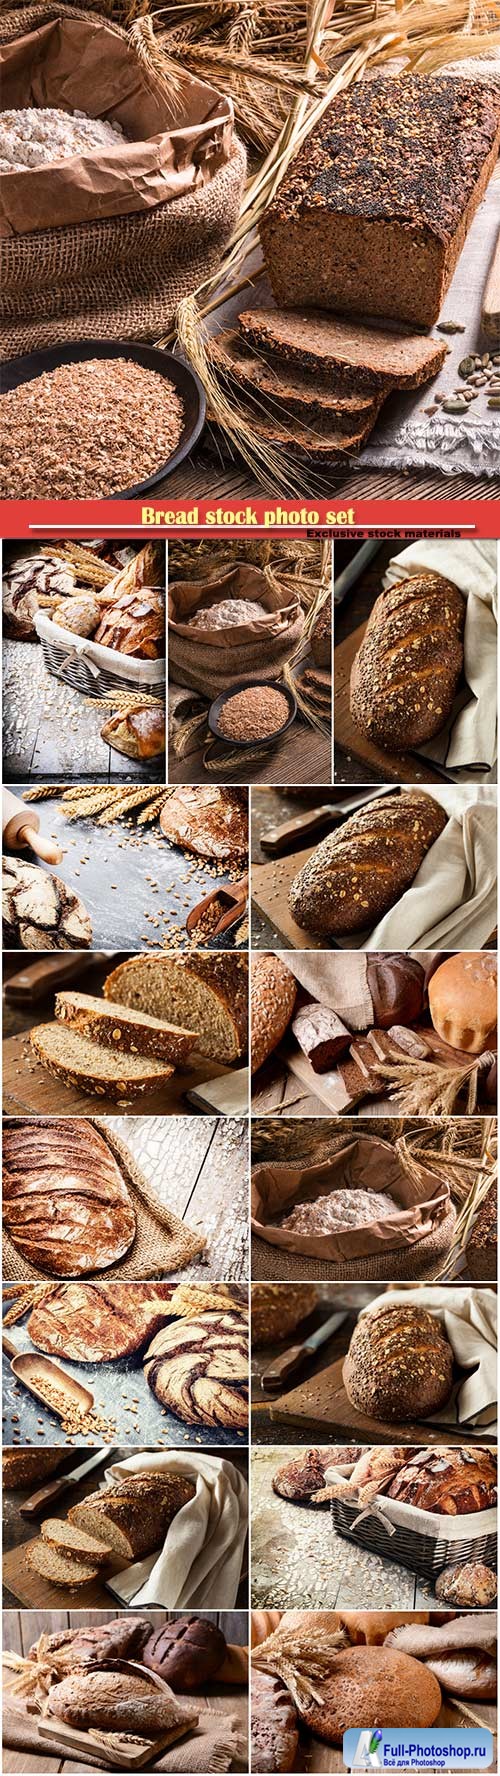 Bread stock photo set